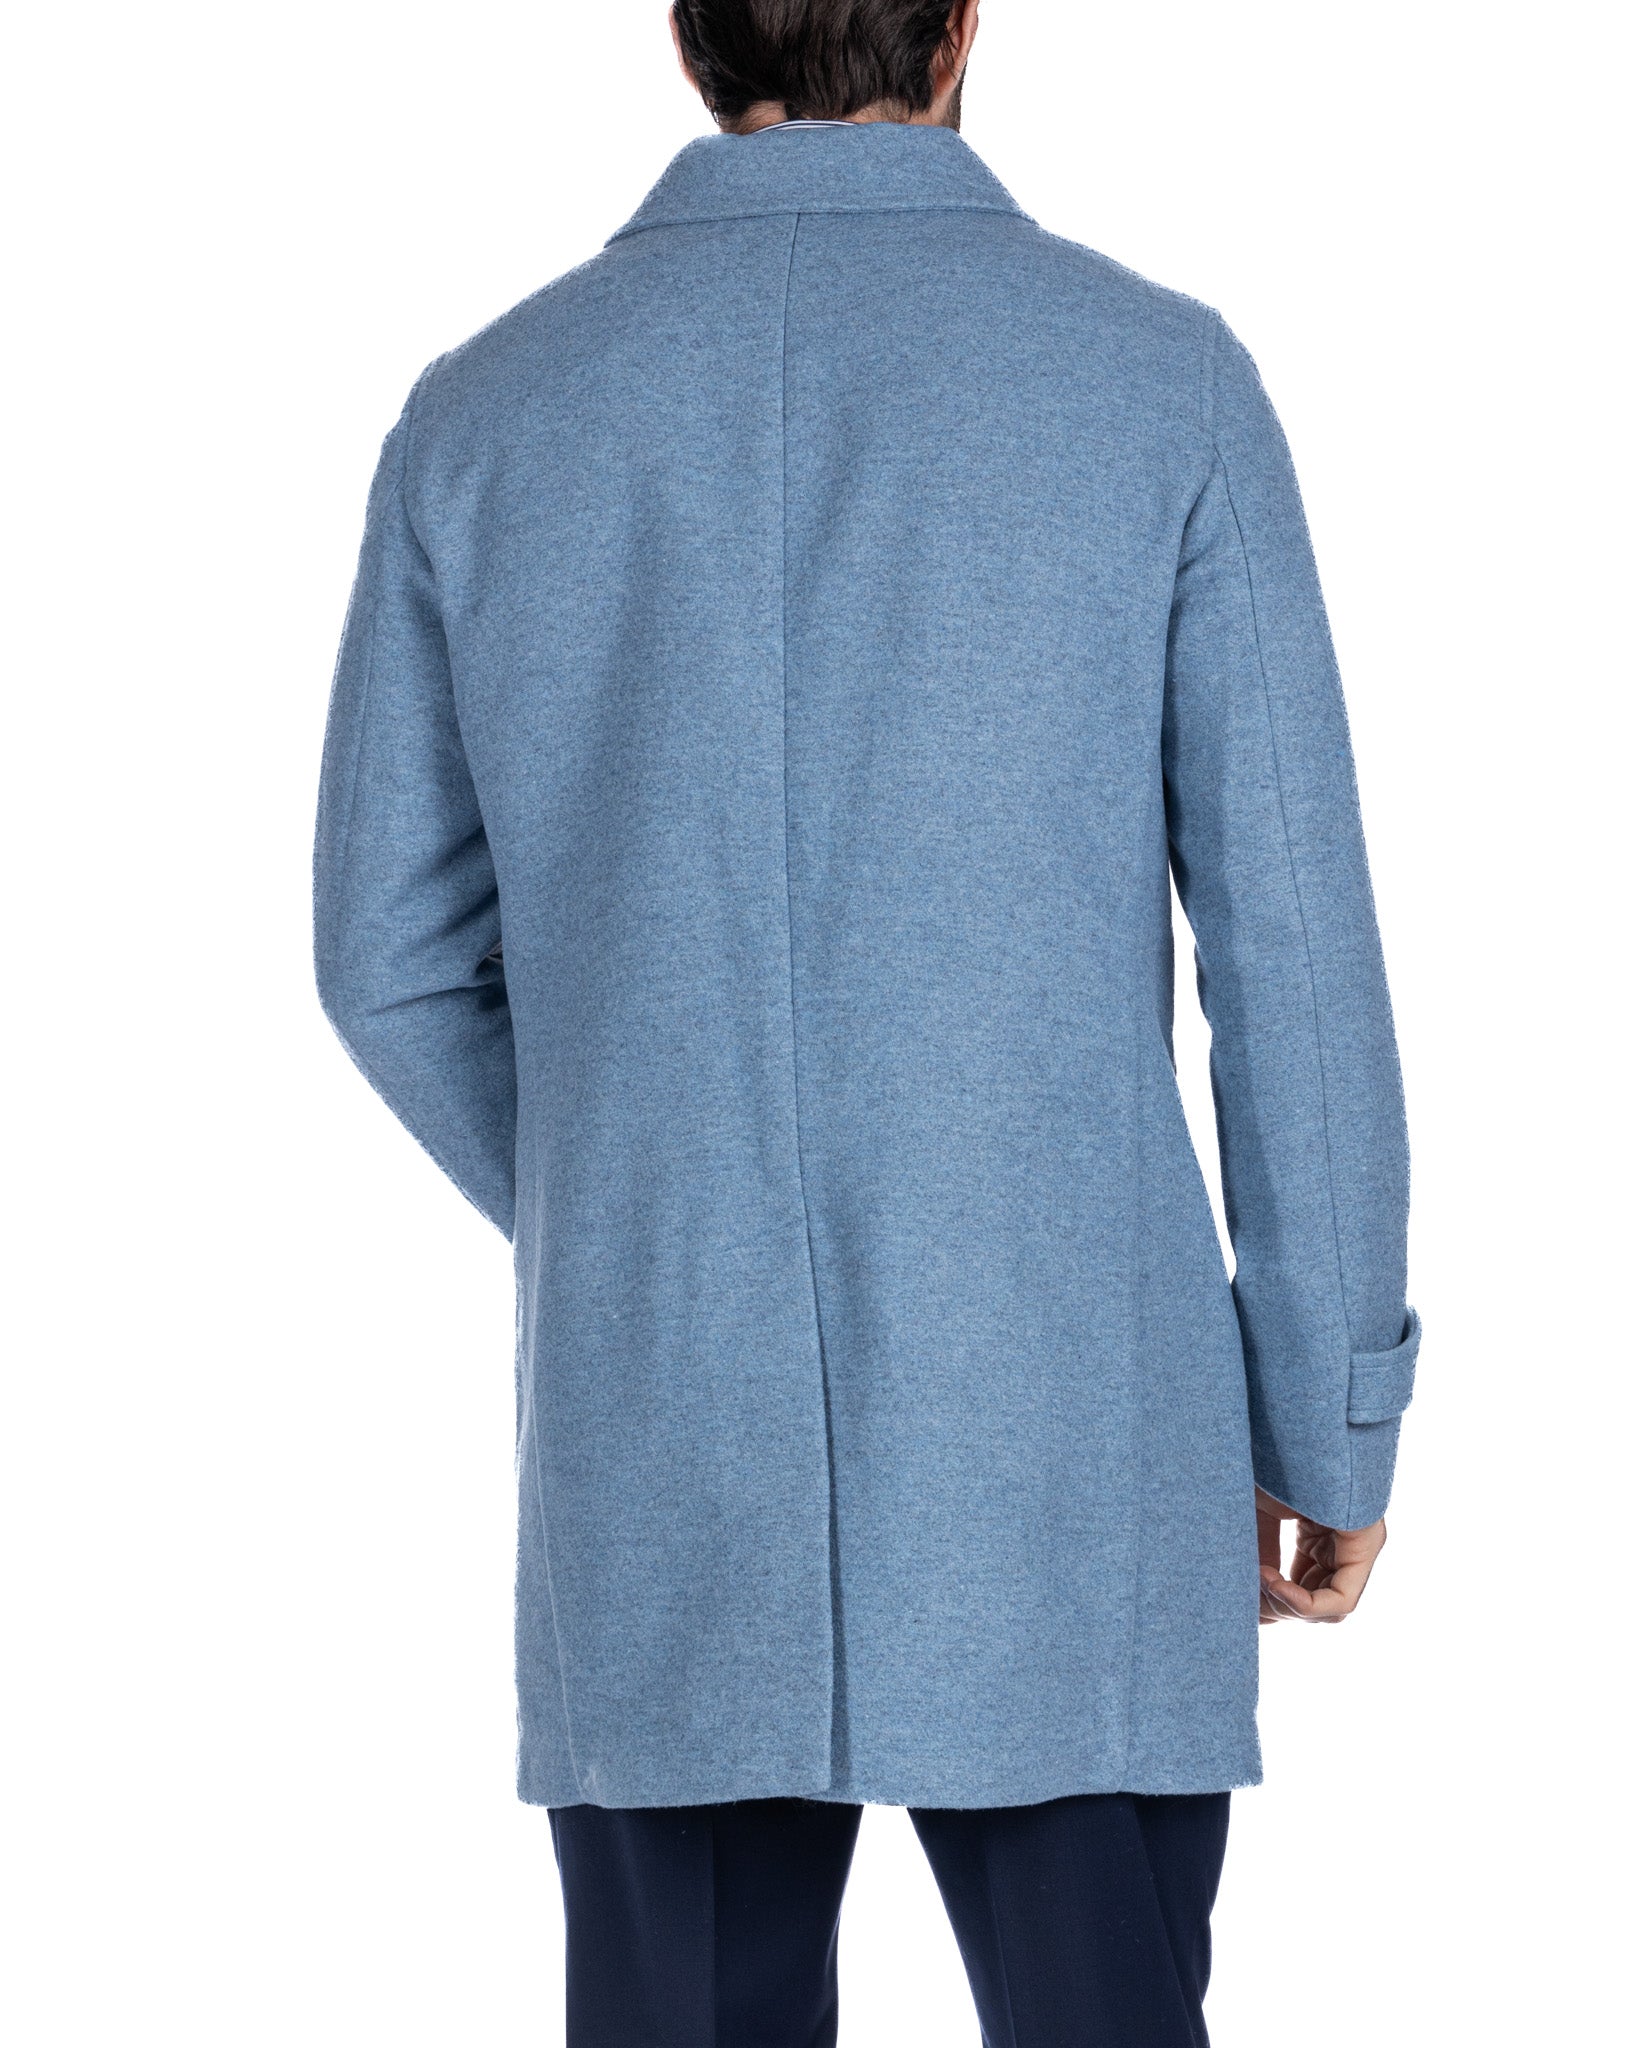 Jean - light blue single-breasted coat